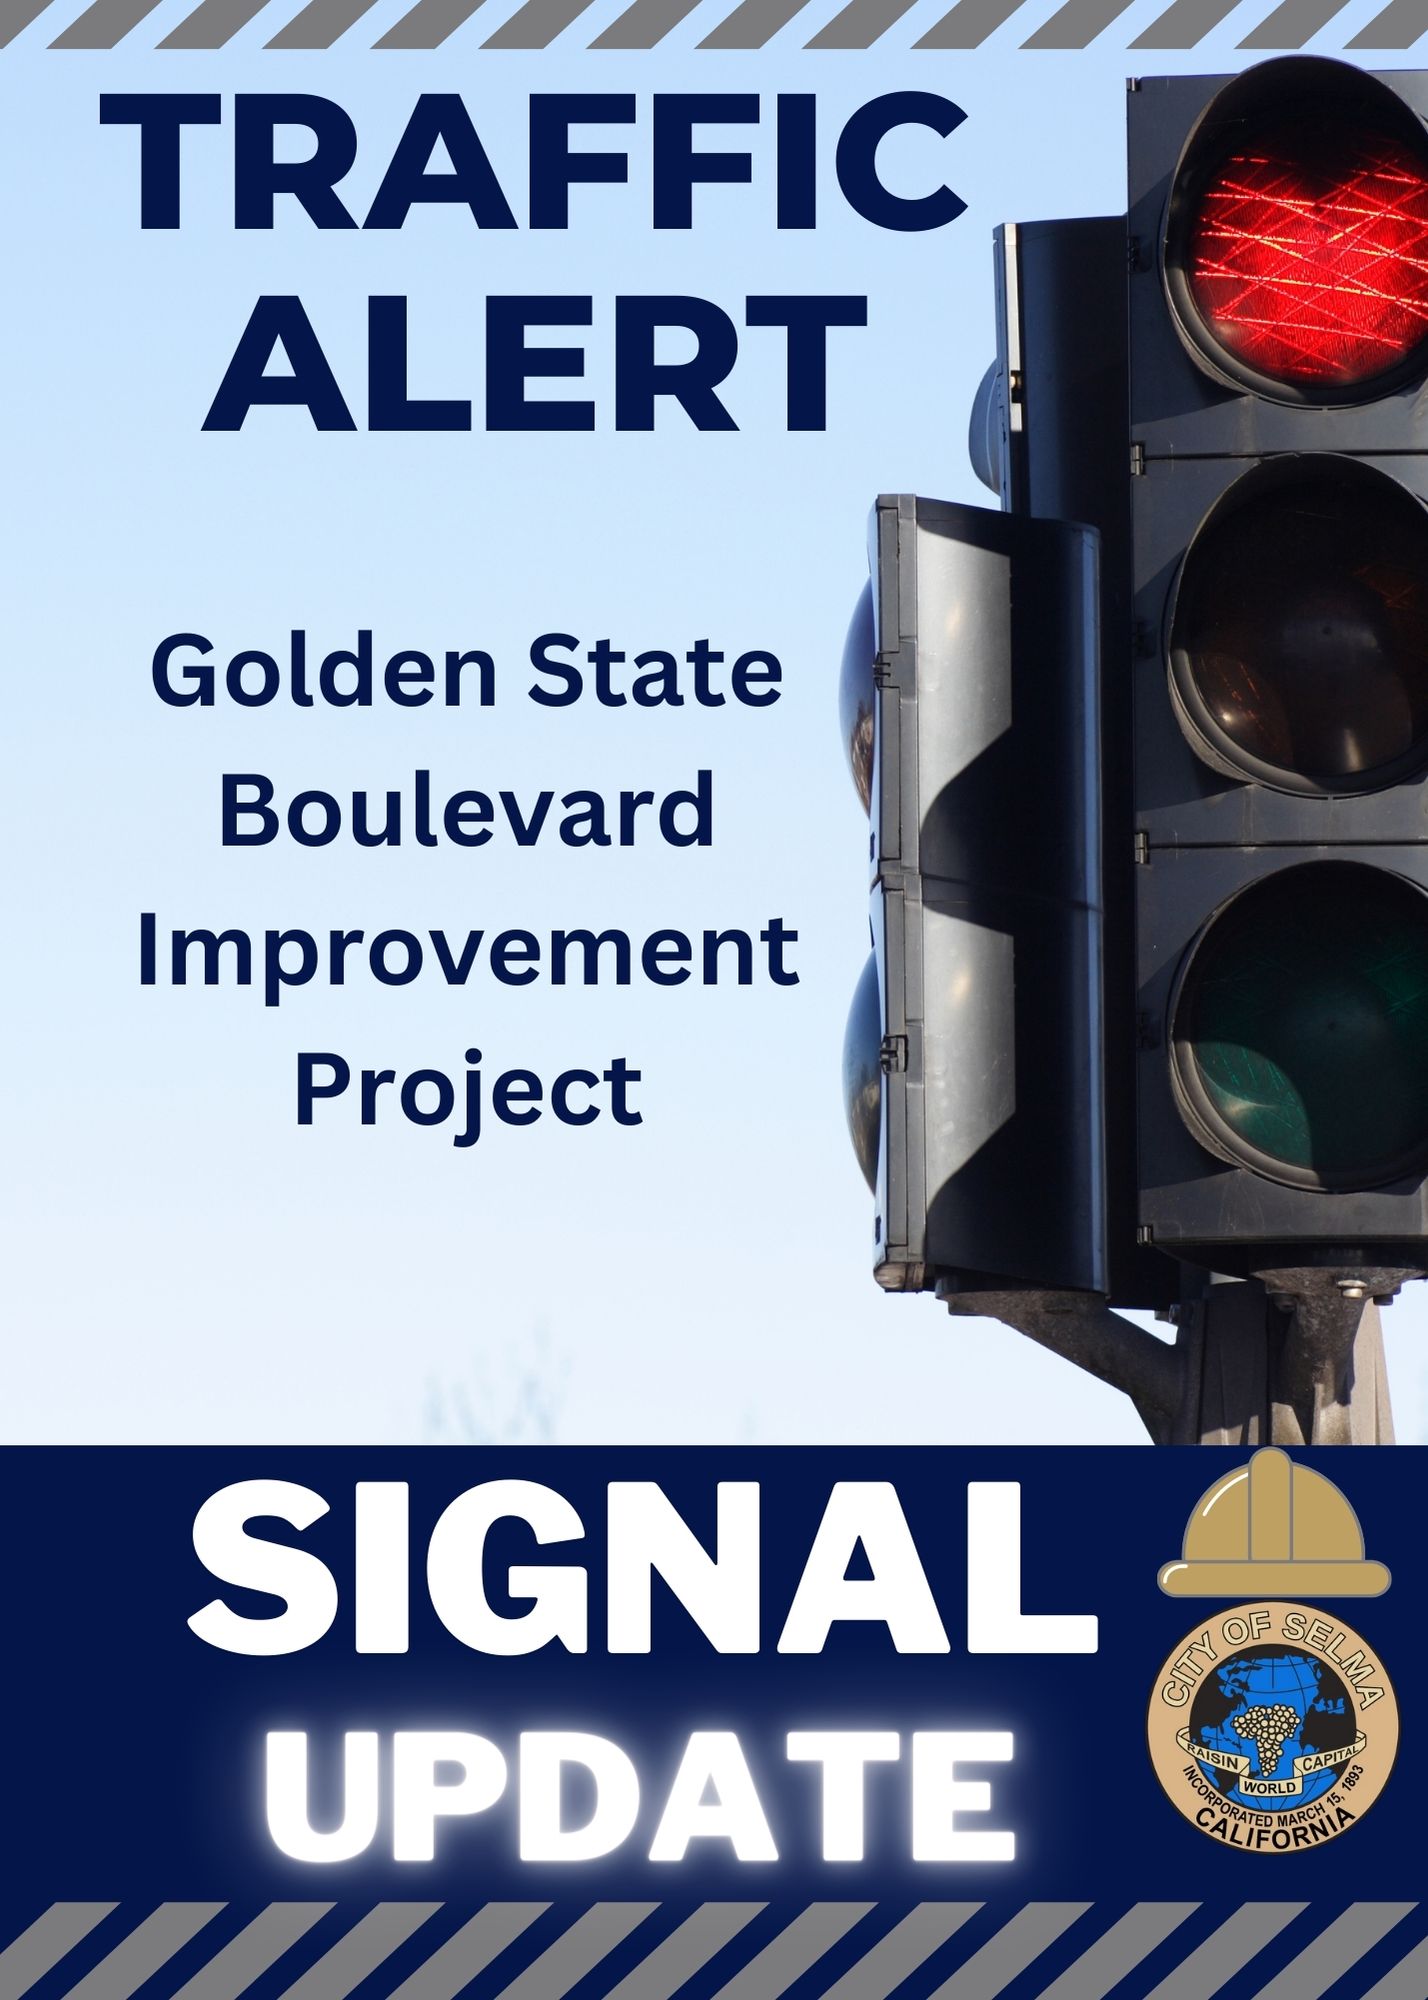 Traffic alert signal update flyer